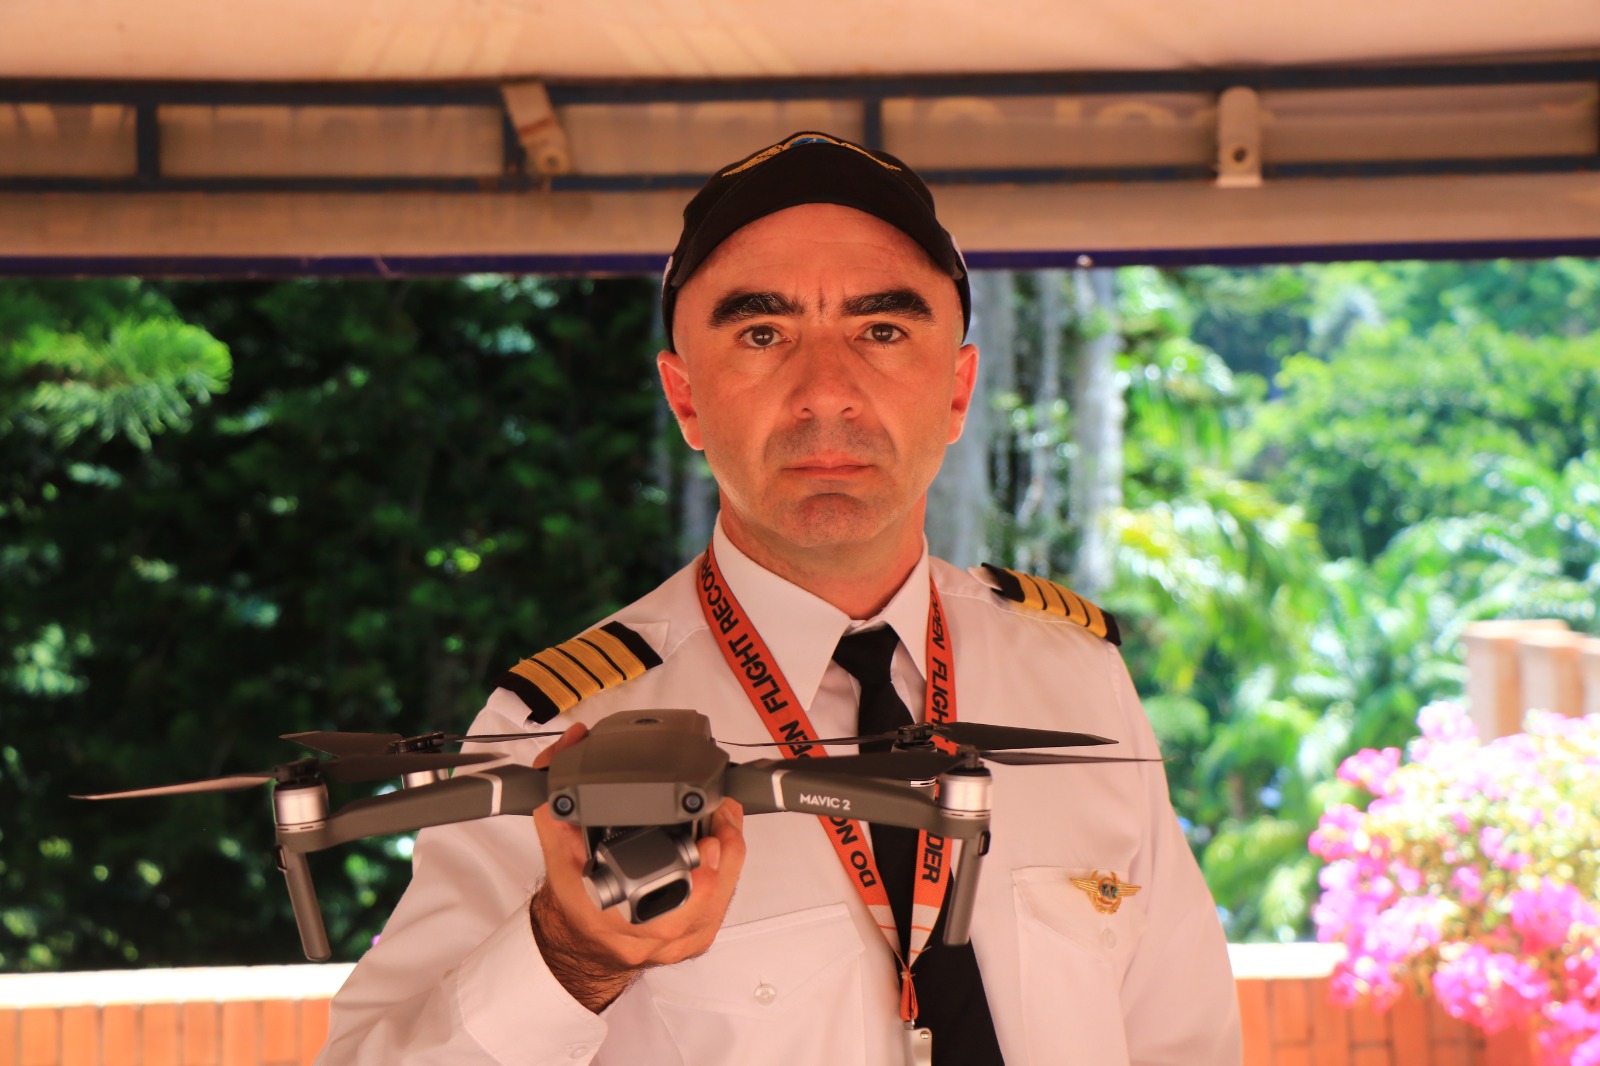 capitan jorge ortiz otero drones digital fest bucaramanga udes